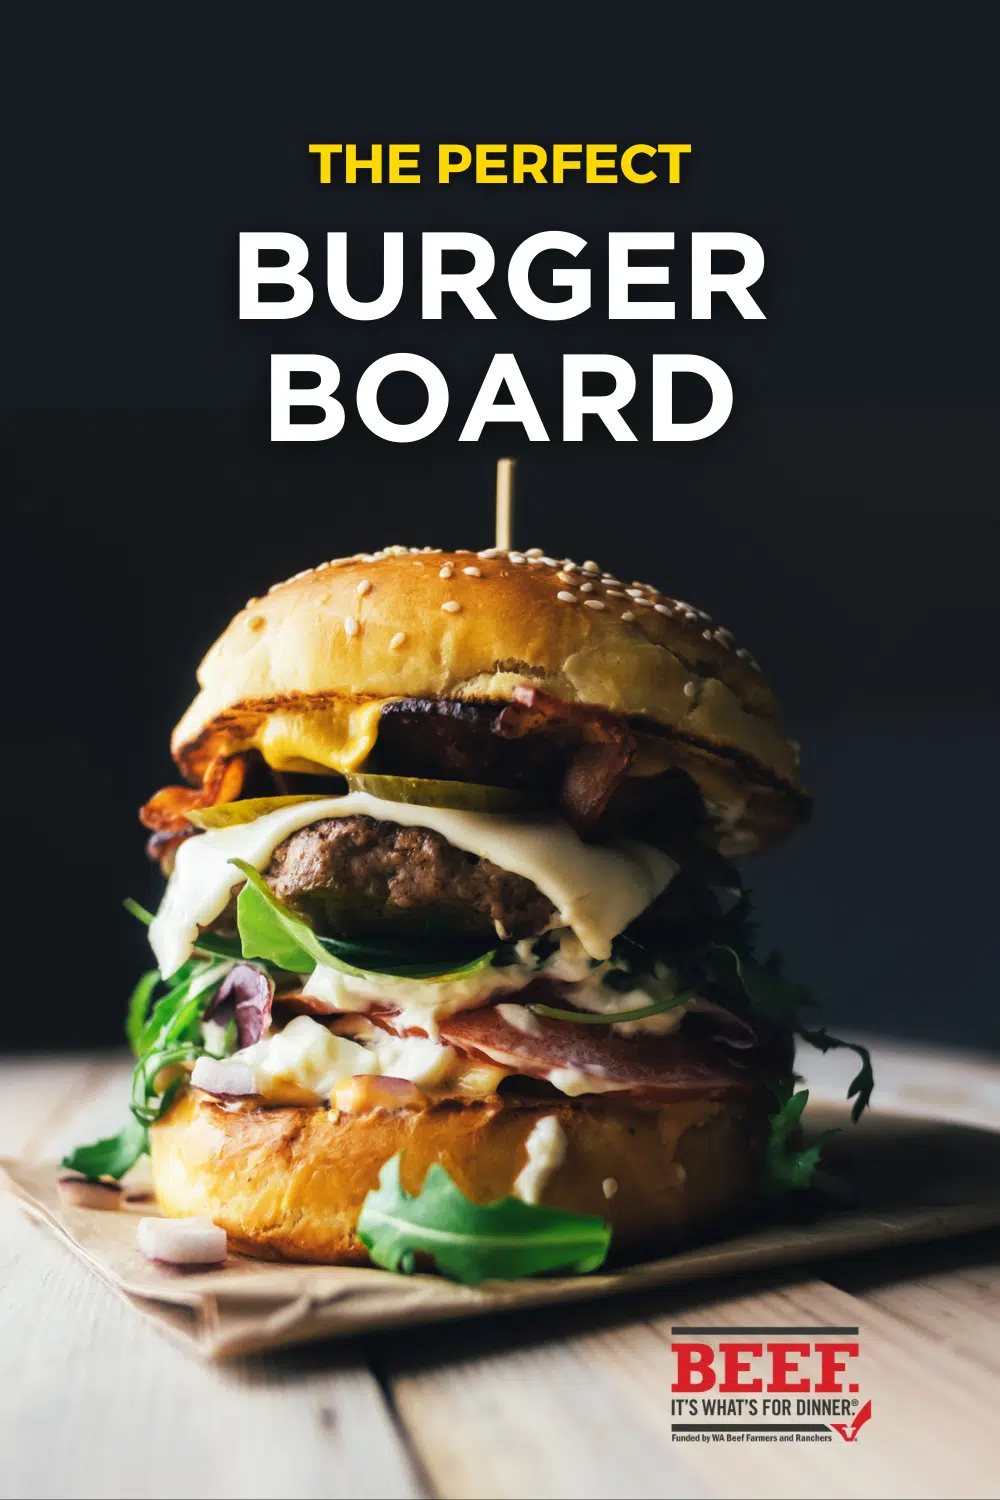 Boards & Burgers